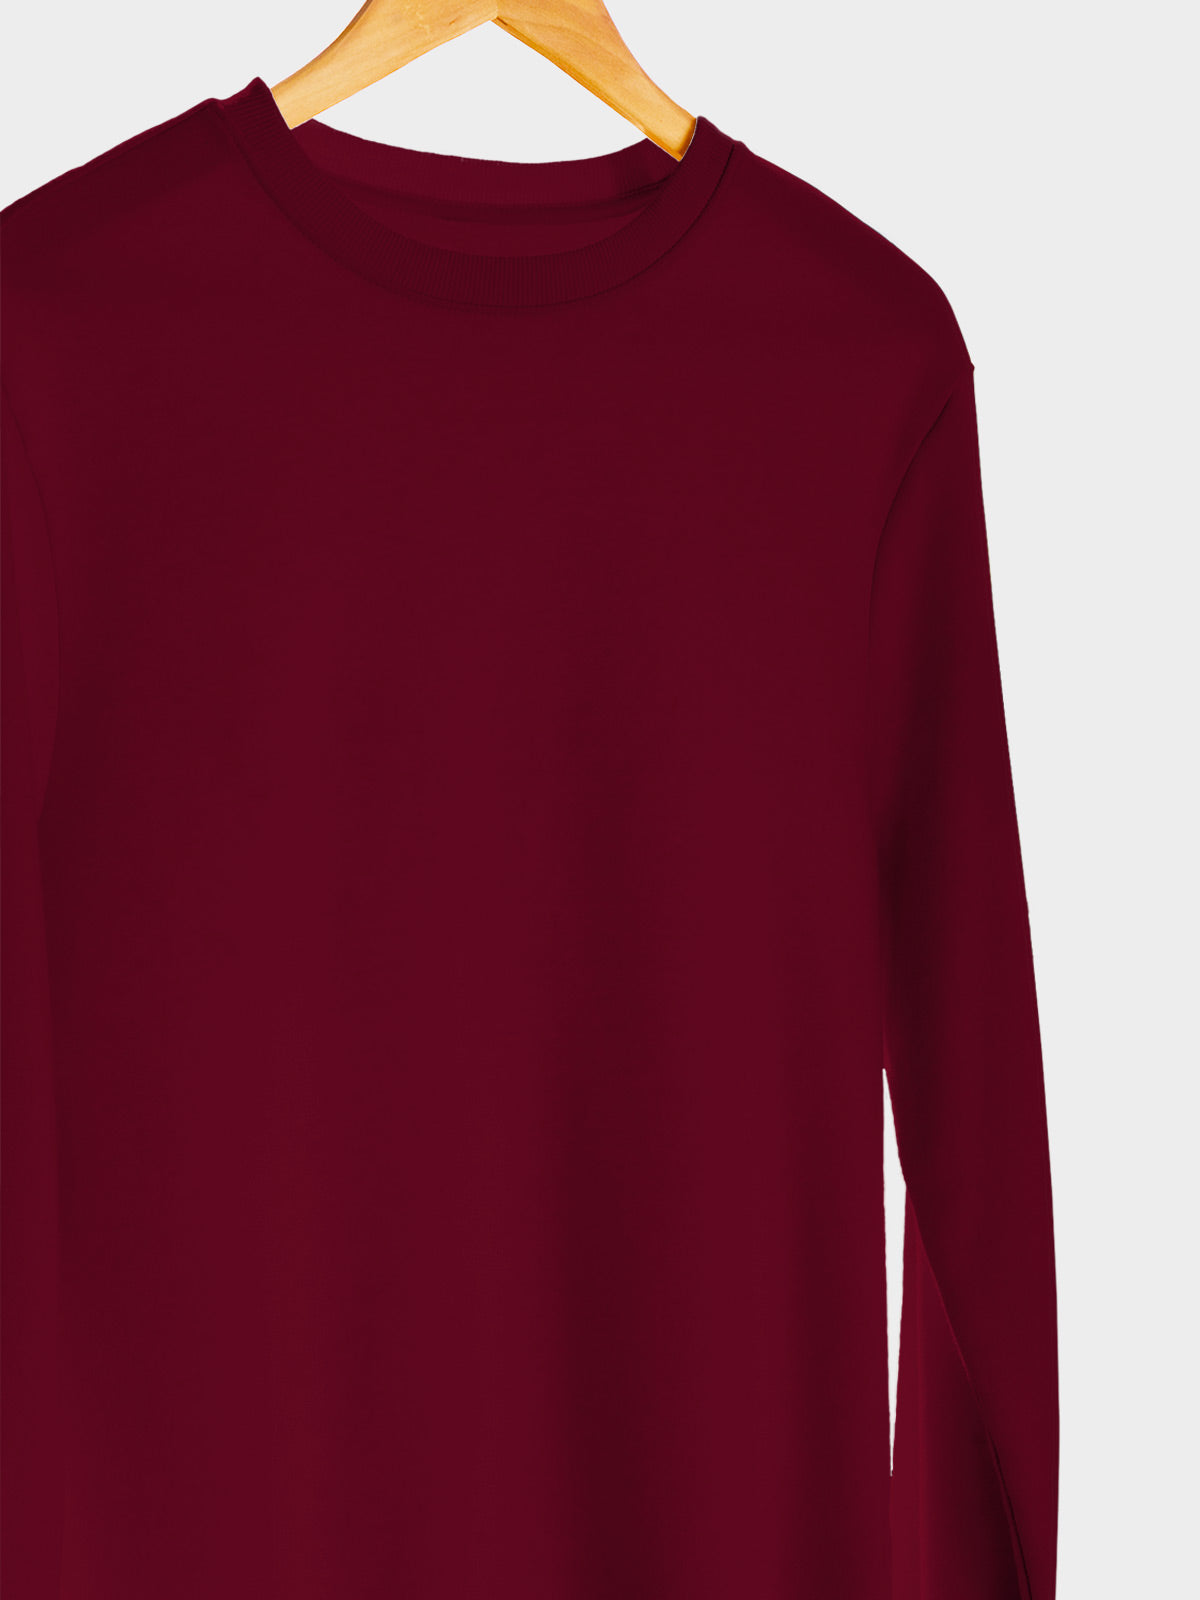 Claret Red & Teal Blue Unisex Plain Sweatshirt Combo